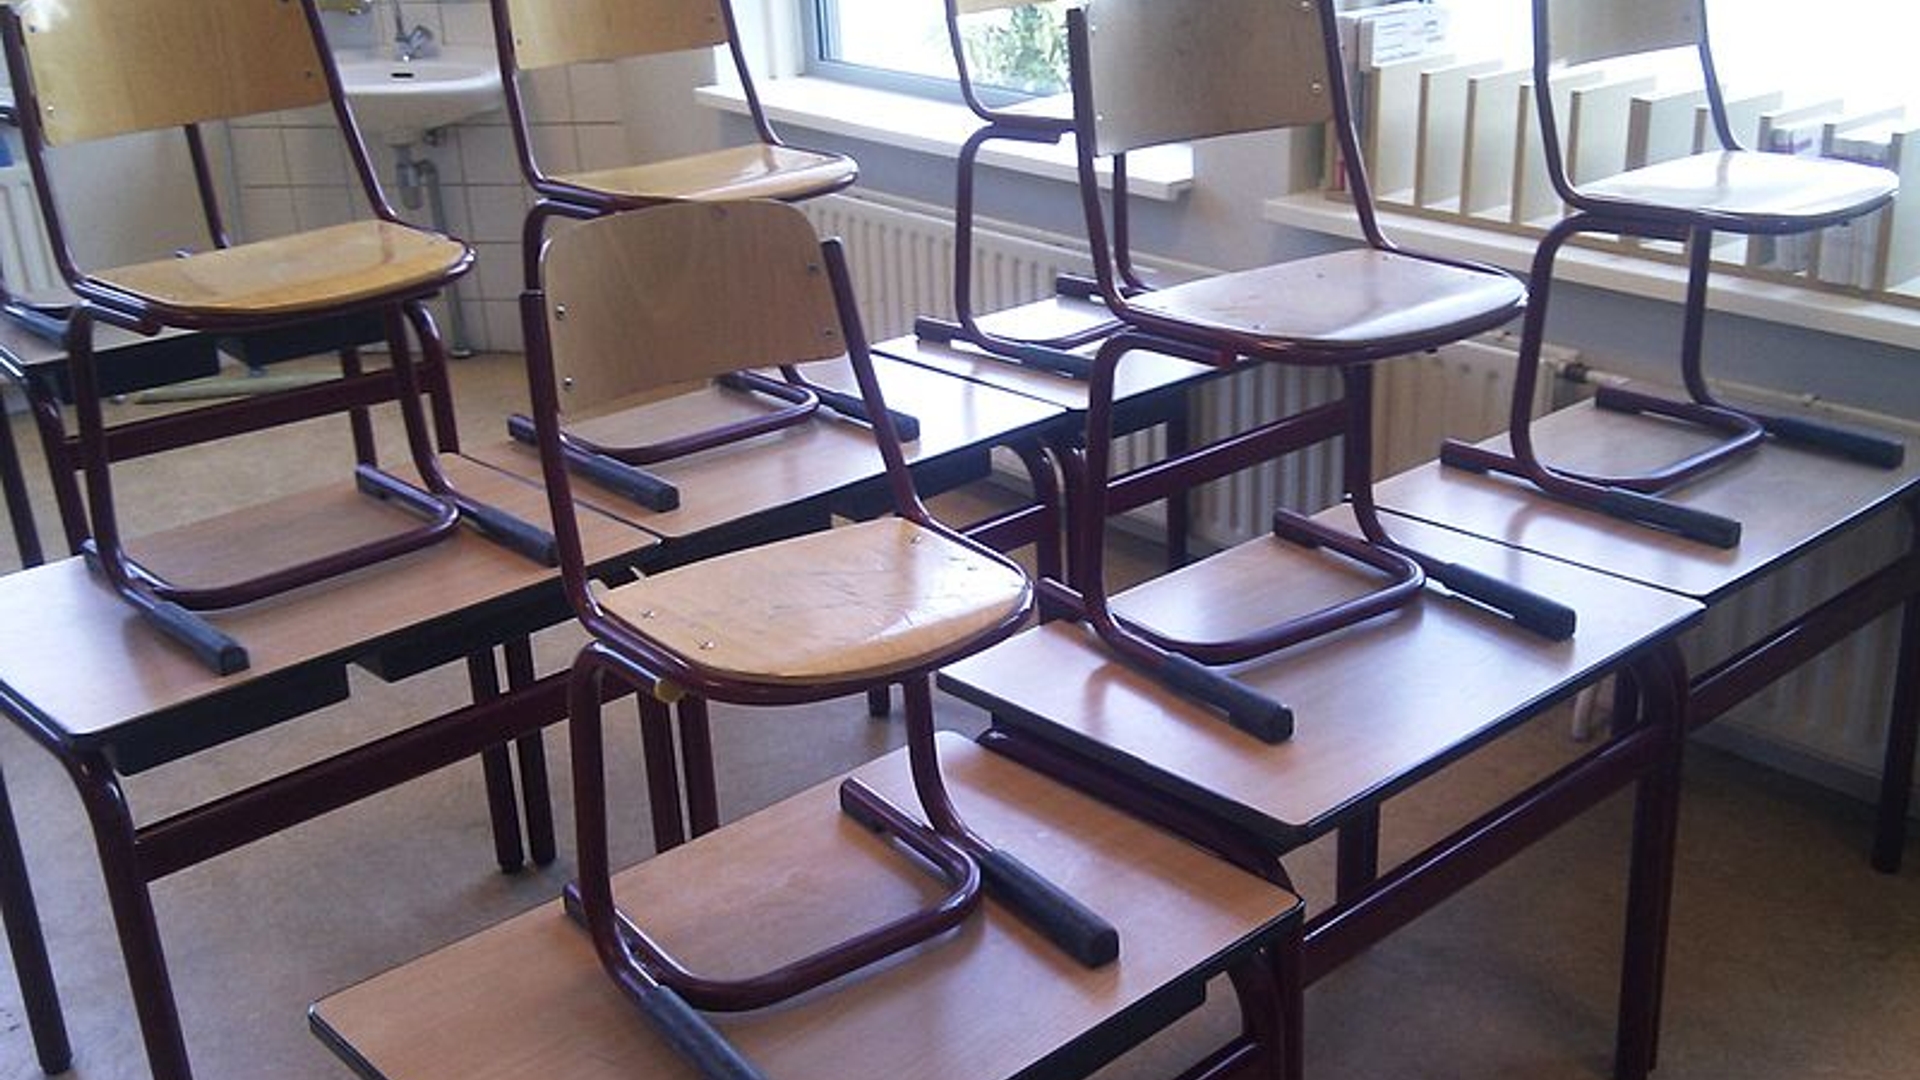 800px-Empty_classroom